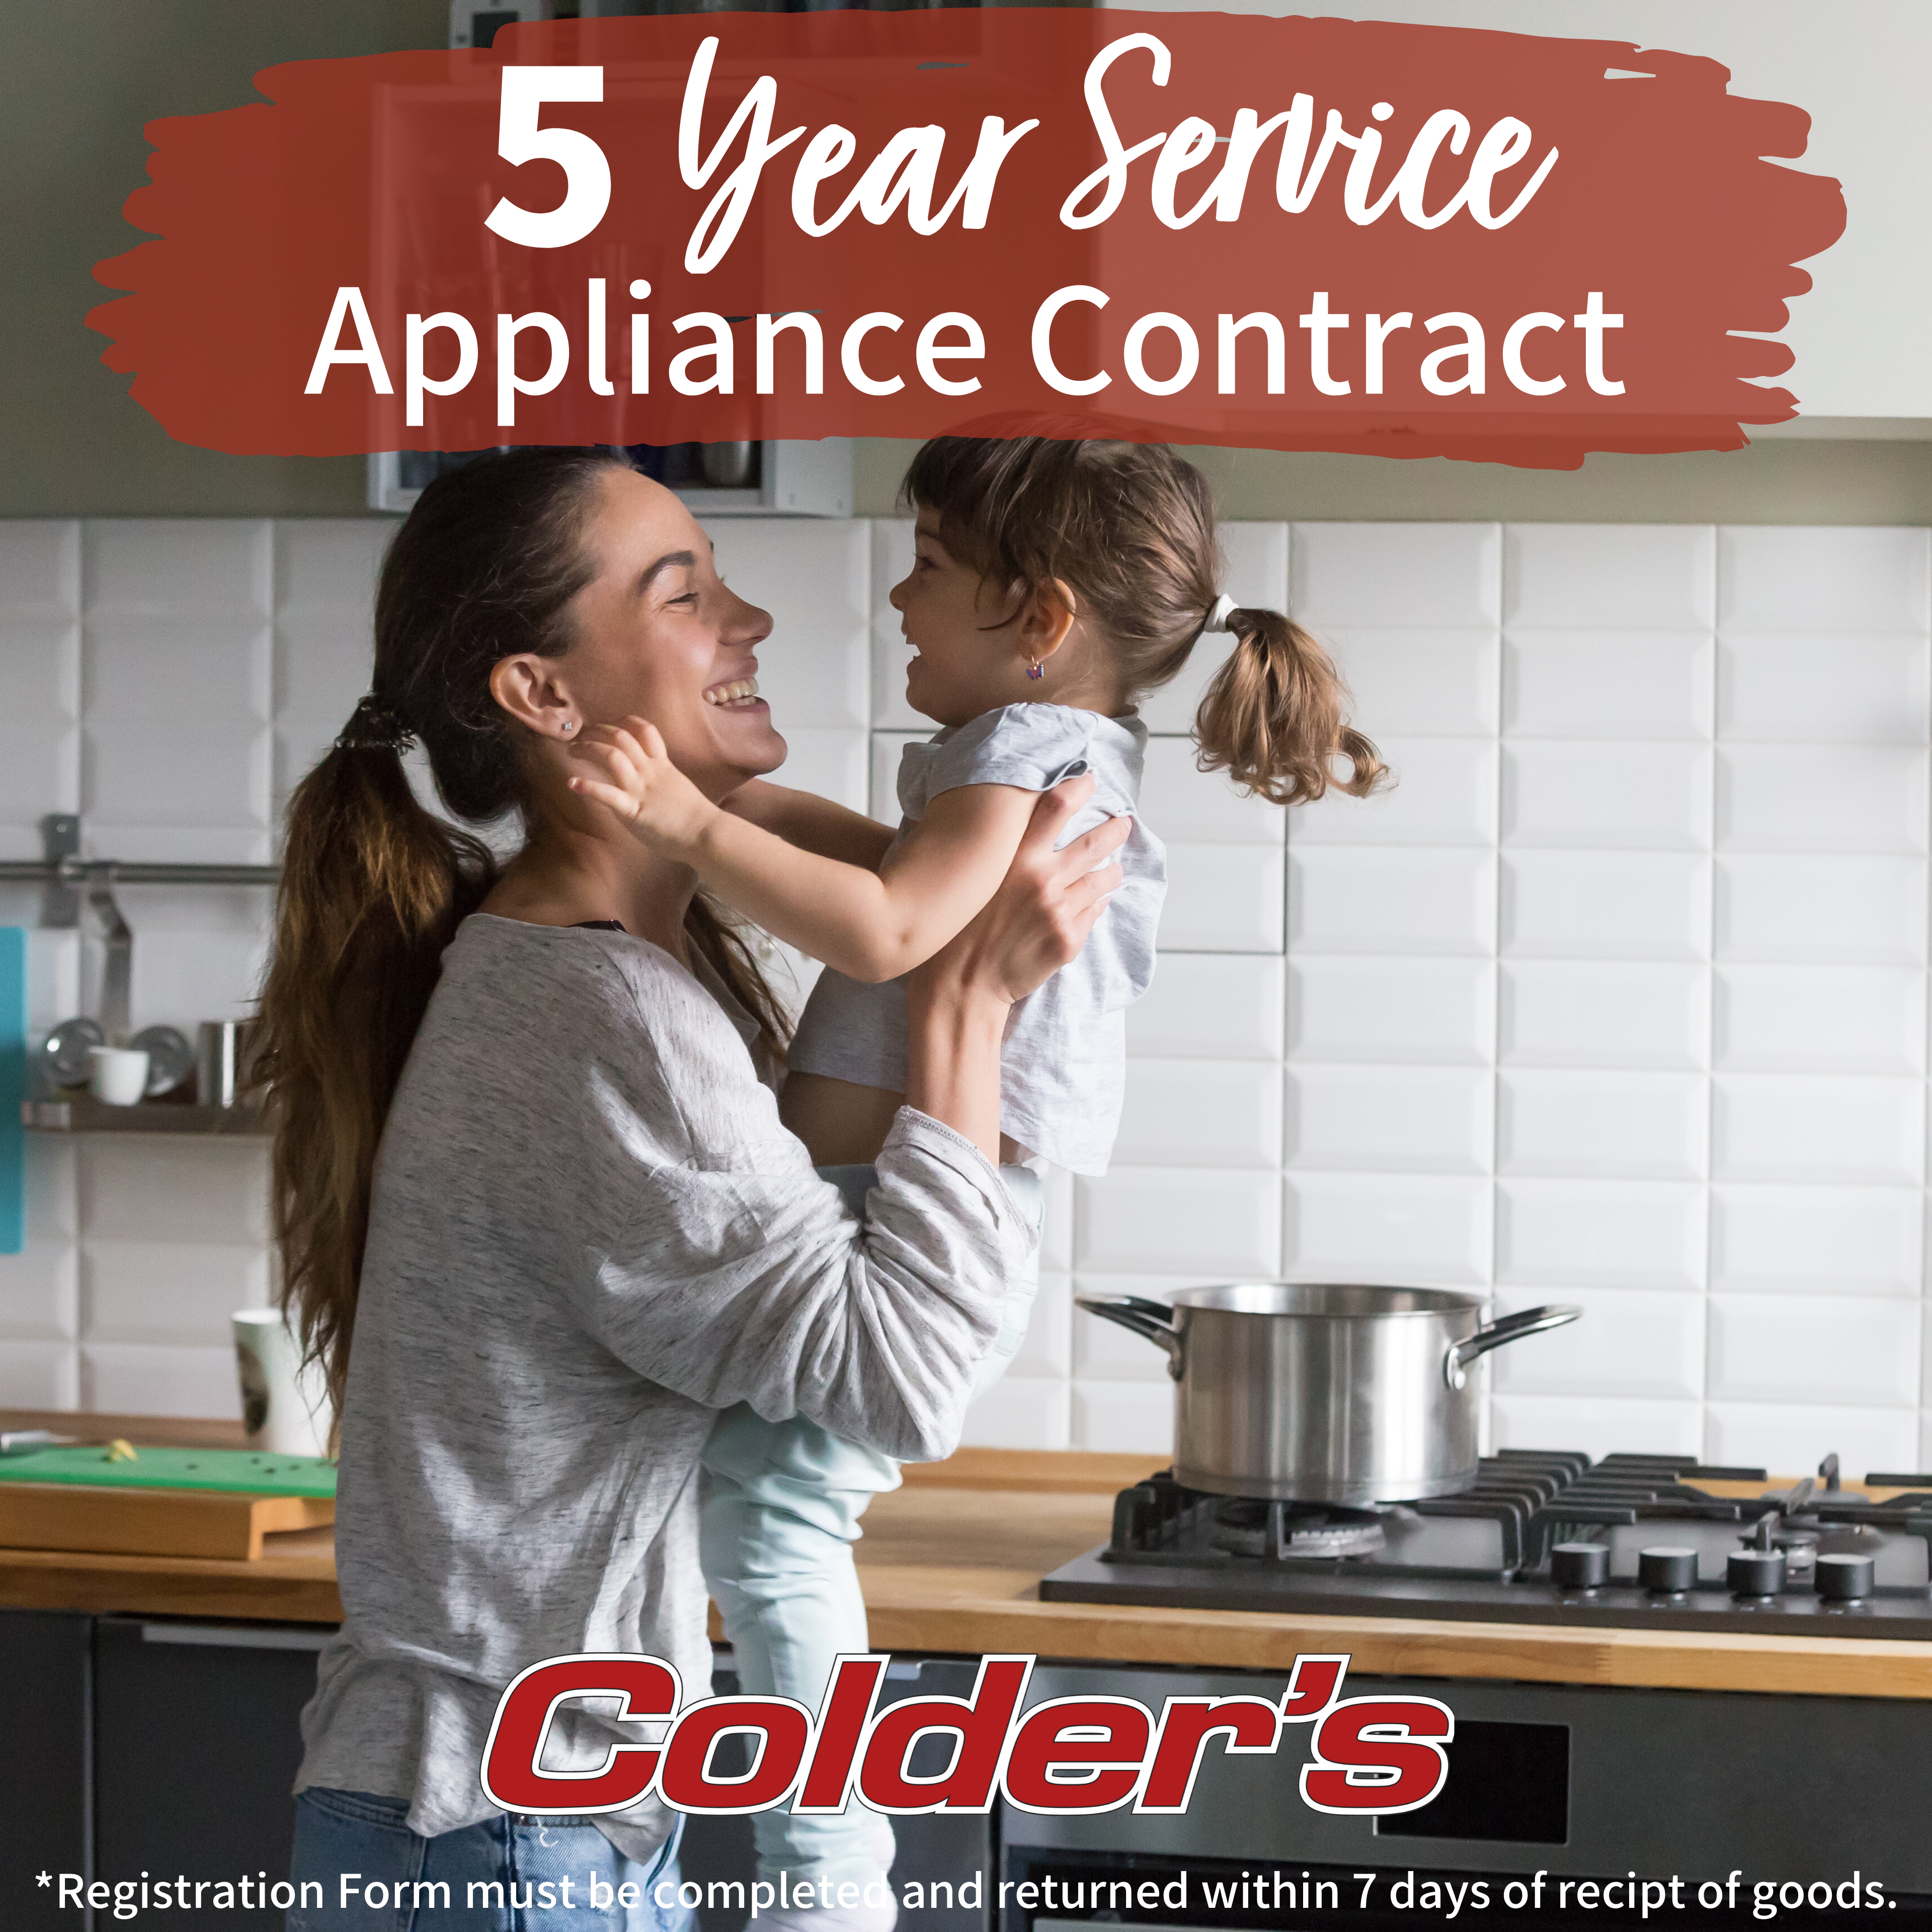 5 Year Service Appliance